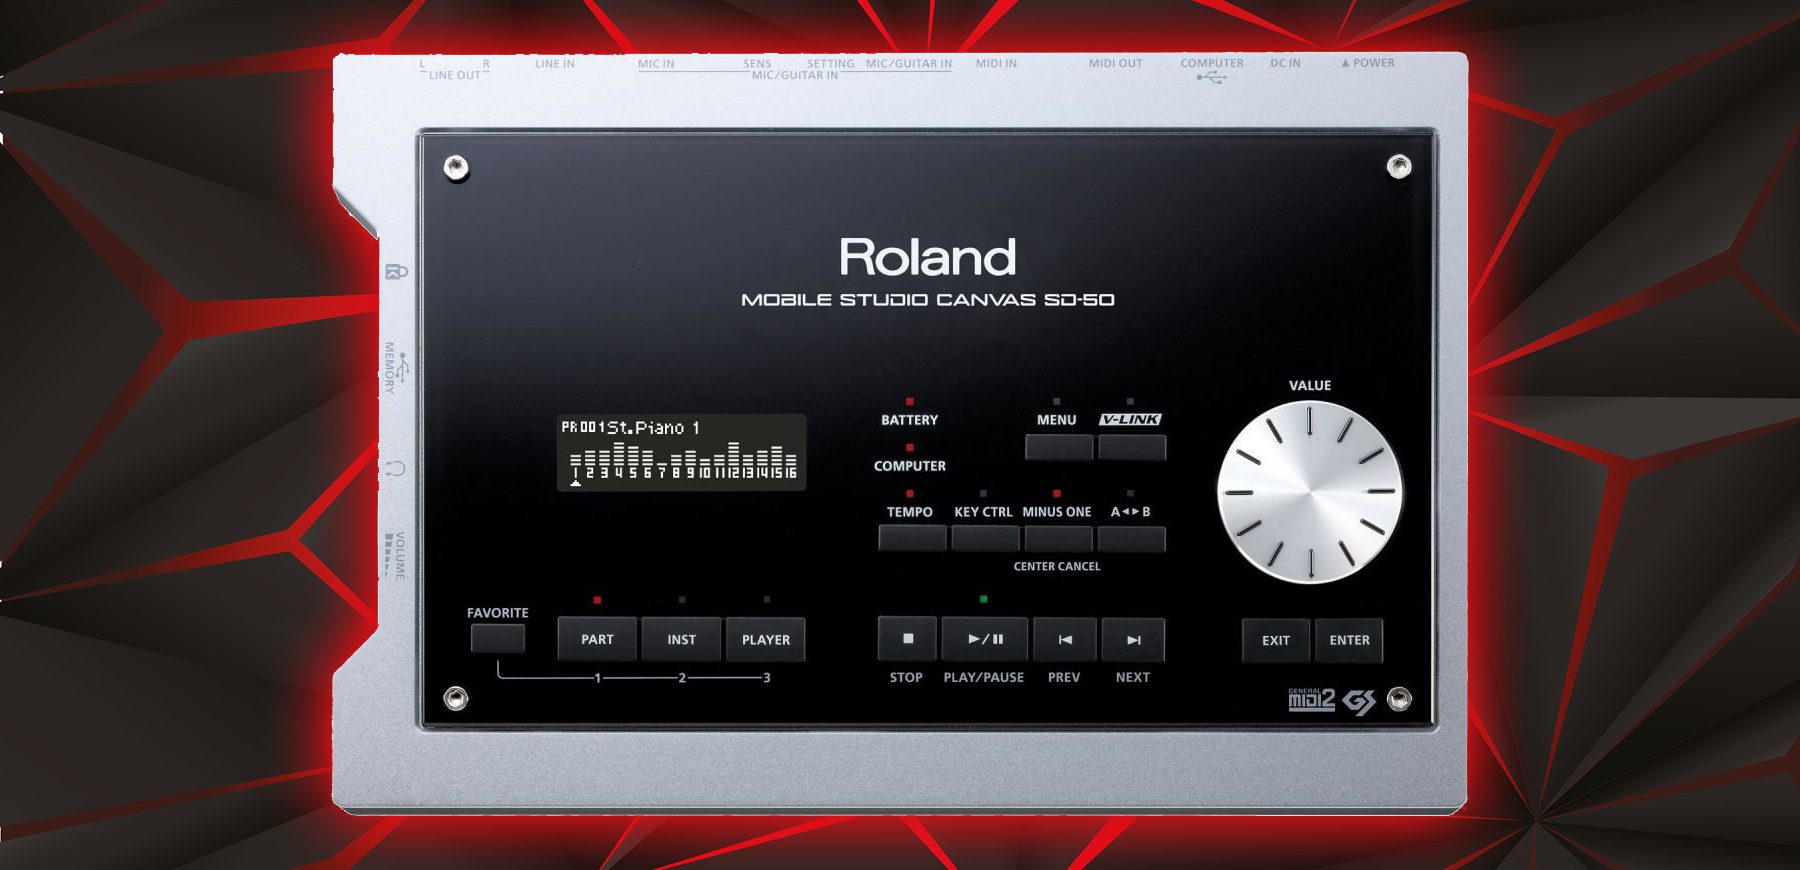 Test: Roland SD-50 Studio Canvas Soundmodul - AMAZONA.de